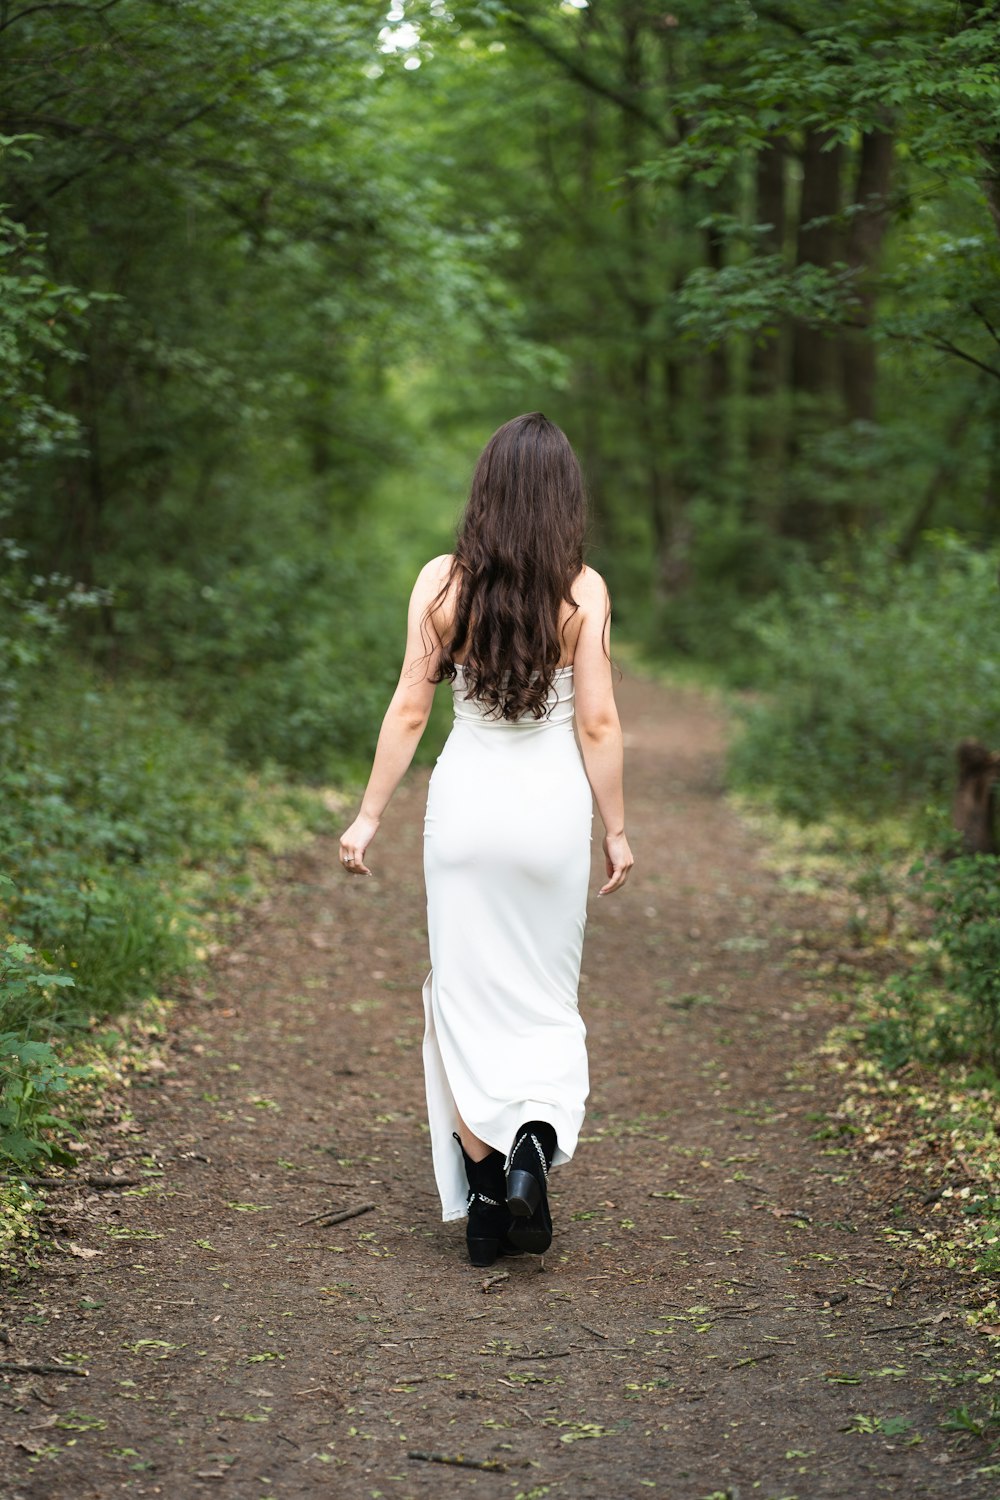 a woman in a white dress walking down a dirt road